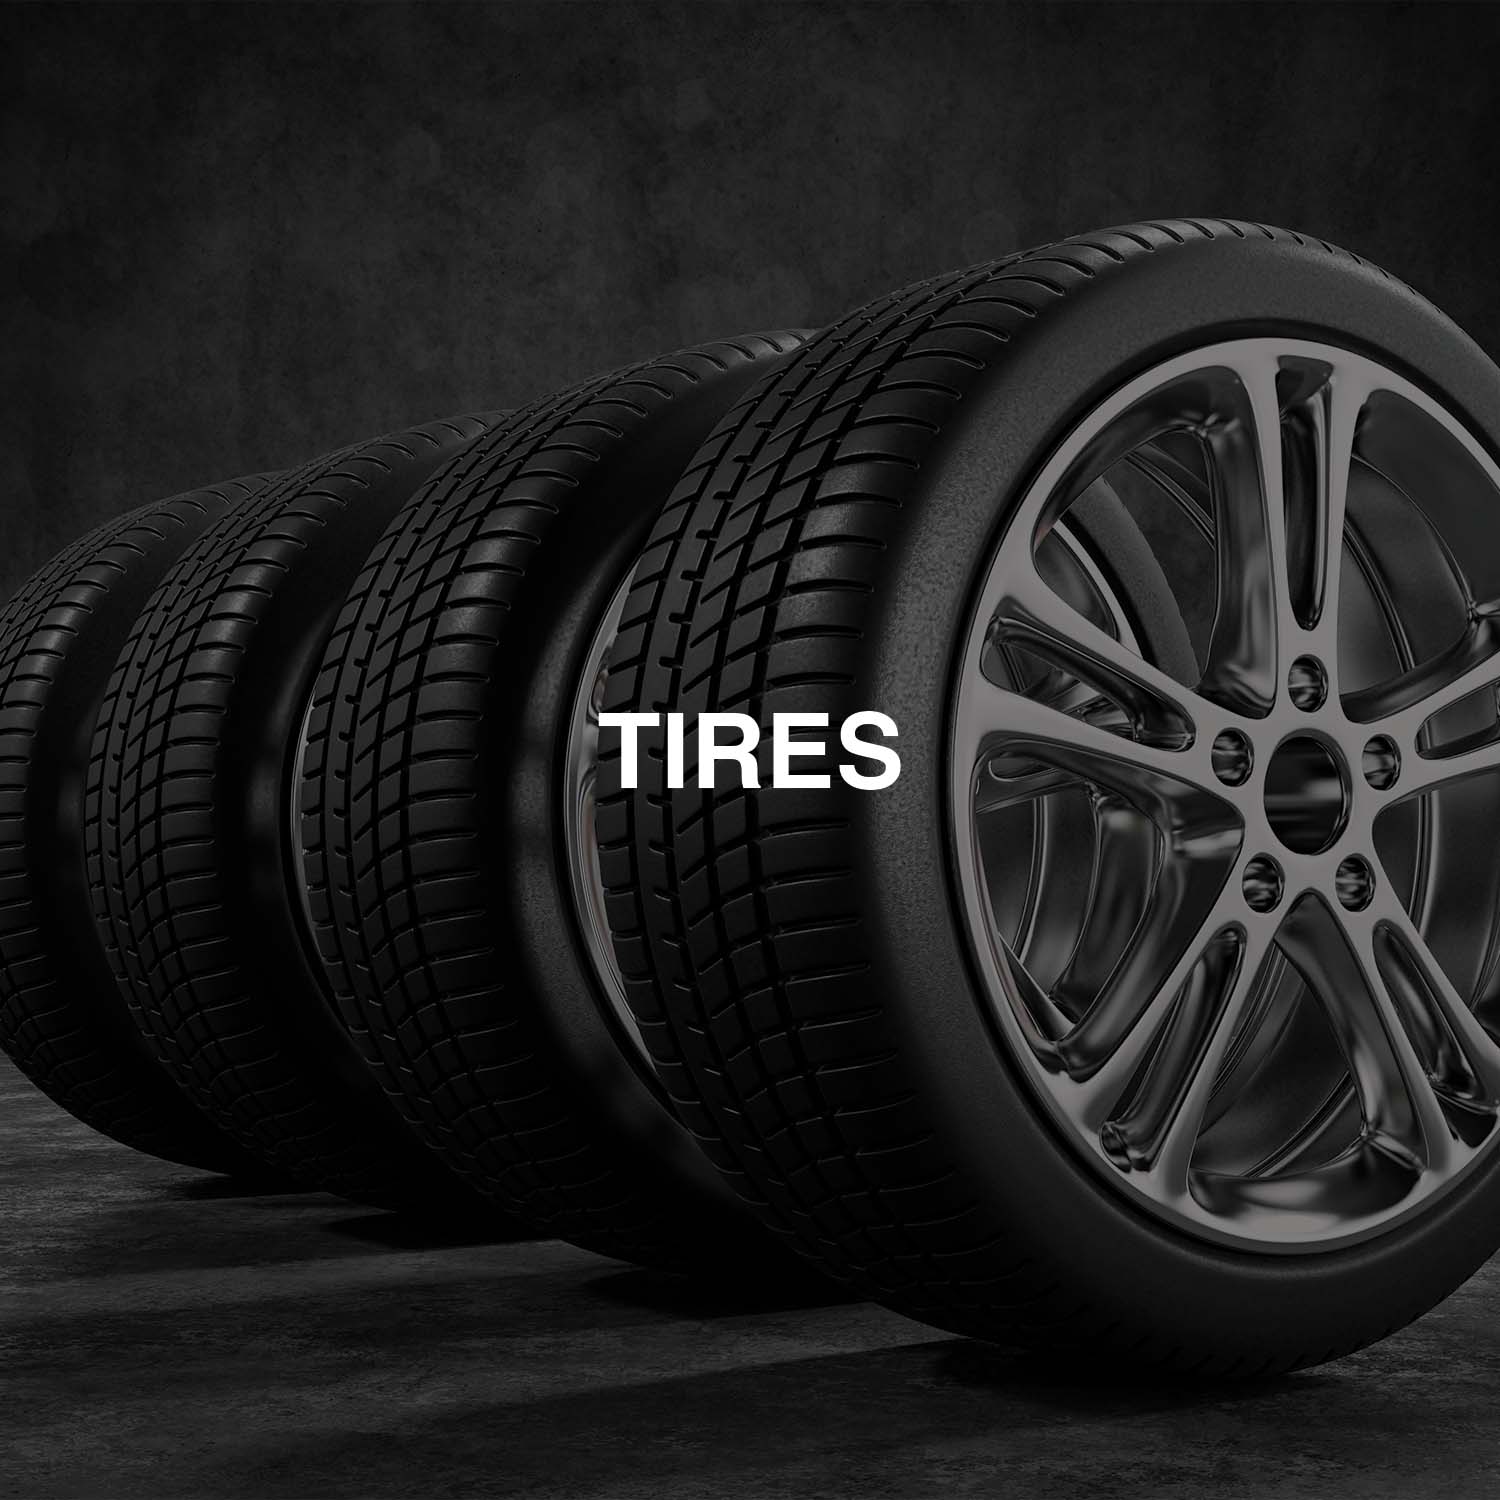 Tires_title